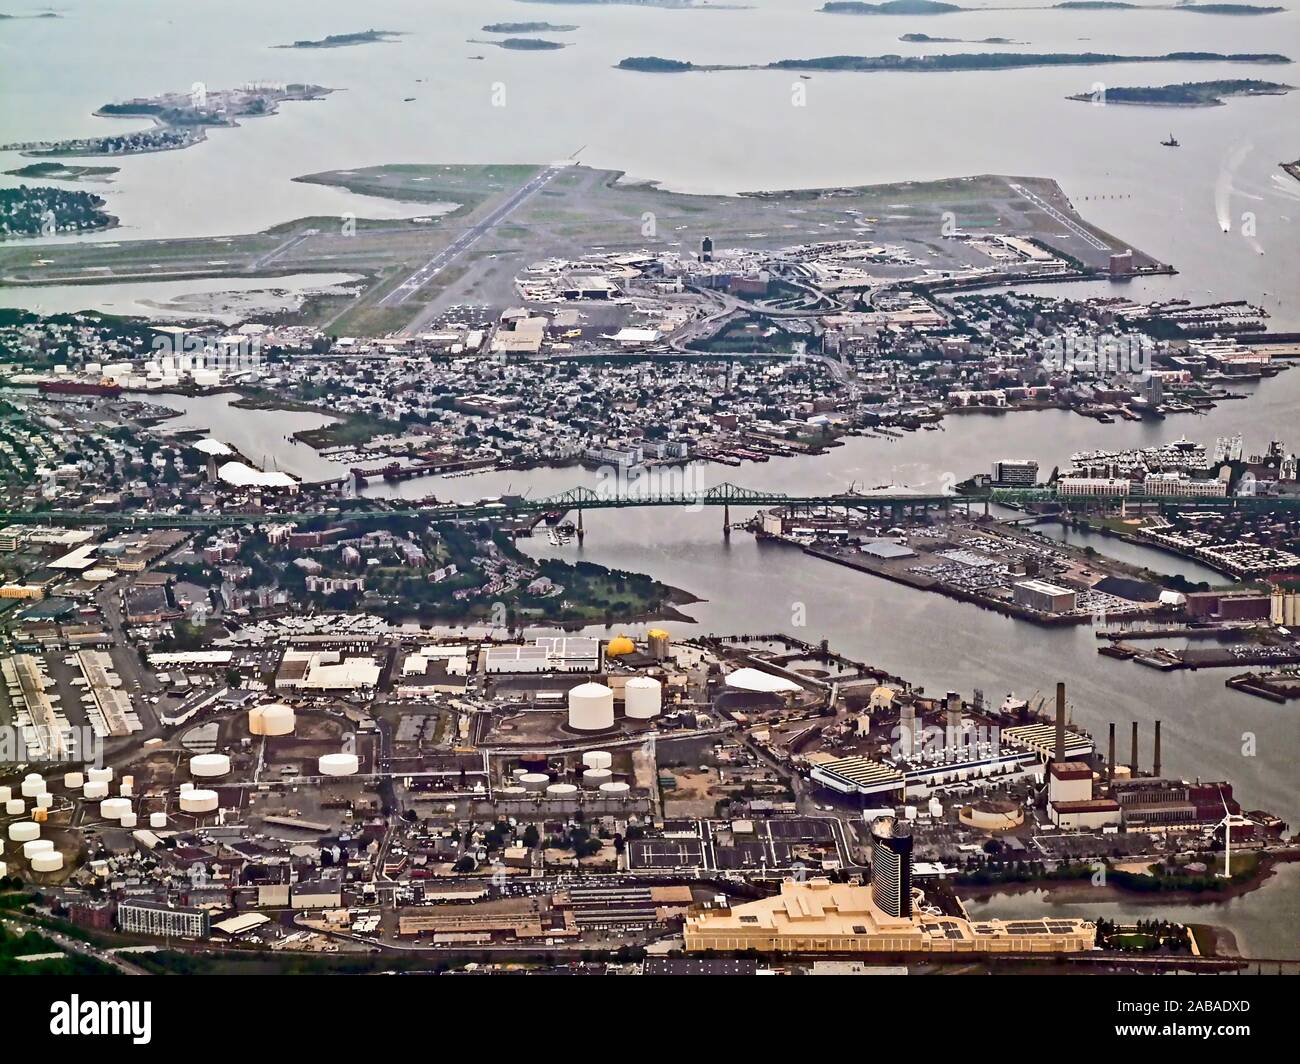 Boston, Massachusetts and Logan International Airport from the air. Stock Photo